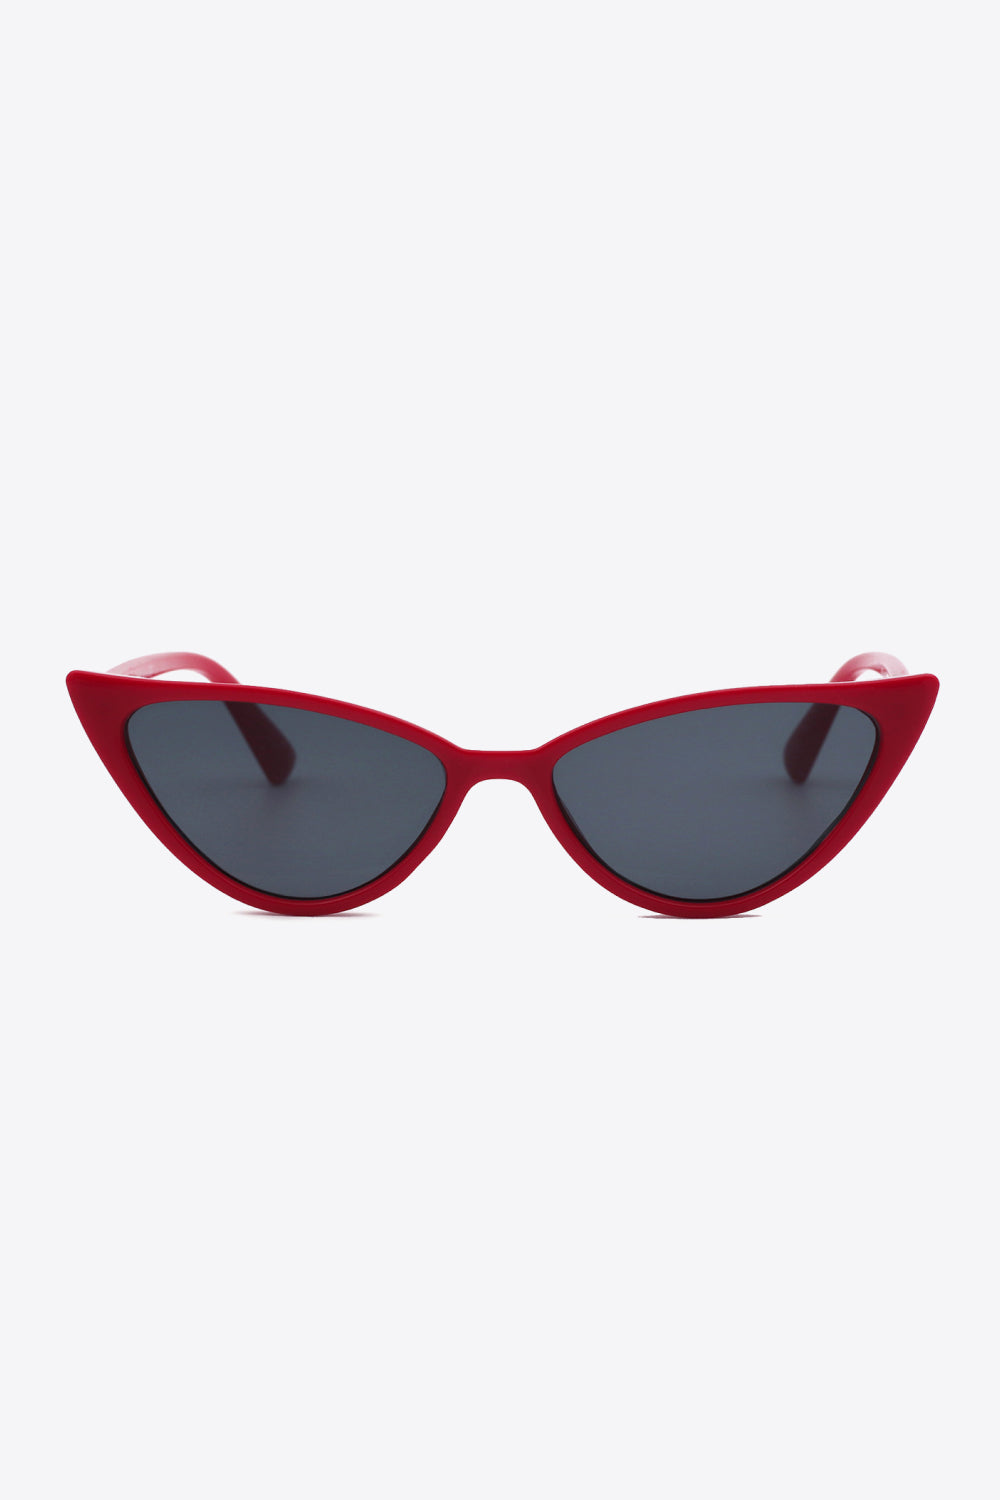 Uylee's Boutique Polycarbonate Cat-Eye Sunglasses